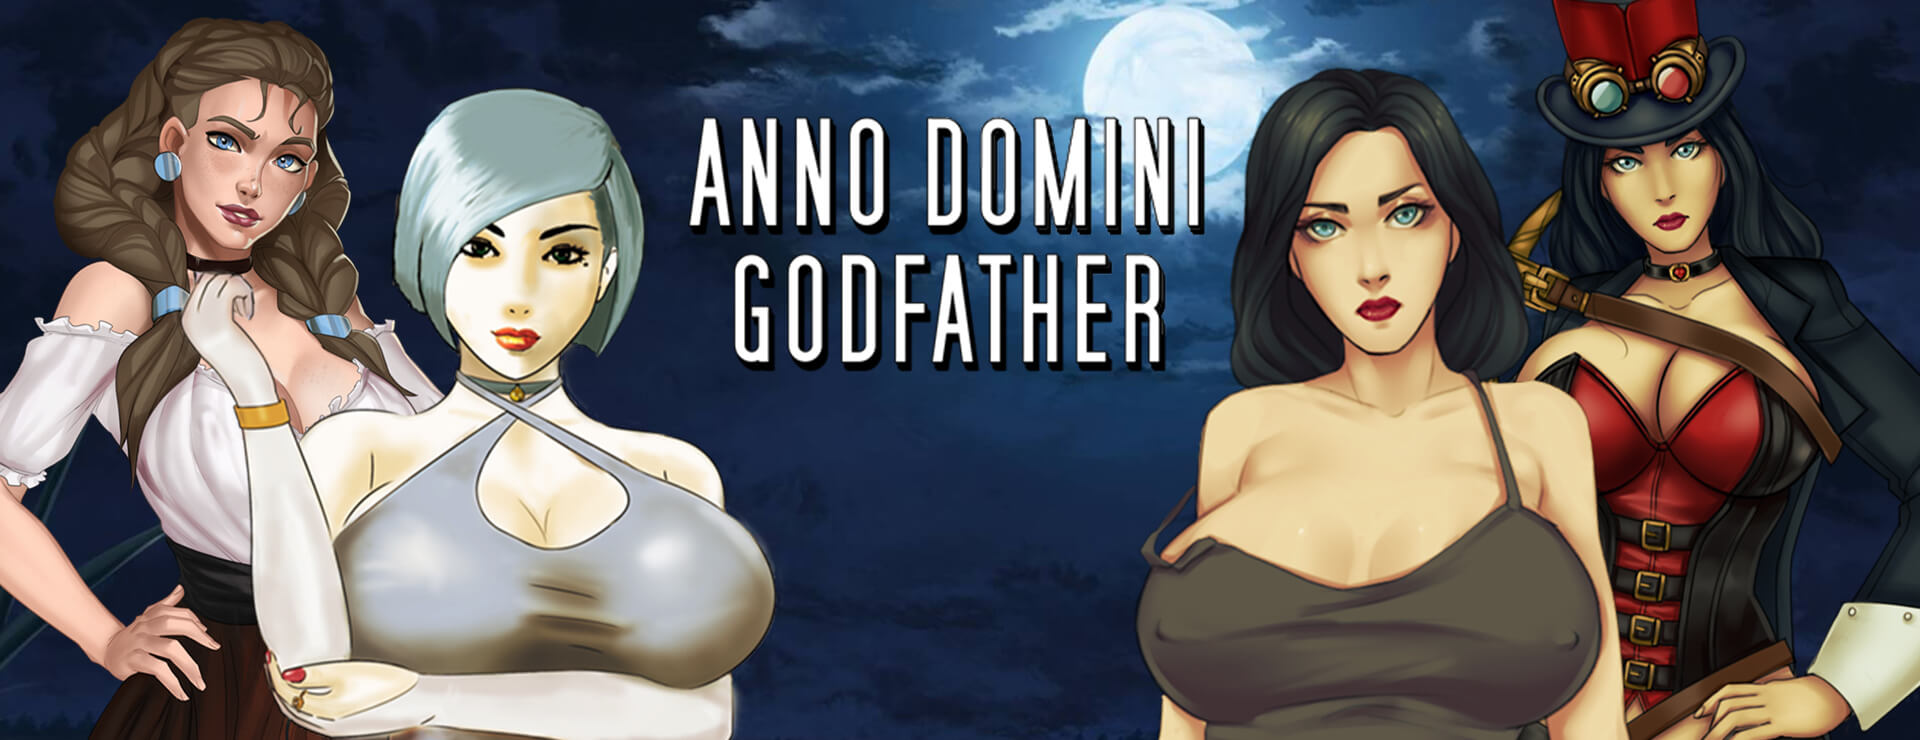 Anno Domini Godfather - RPG Game